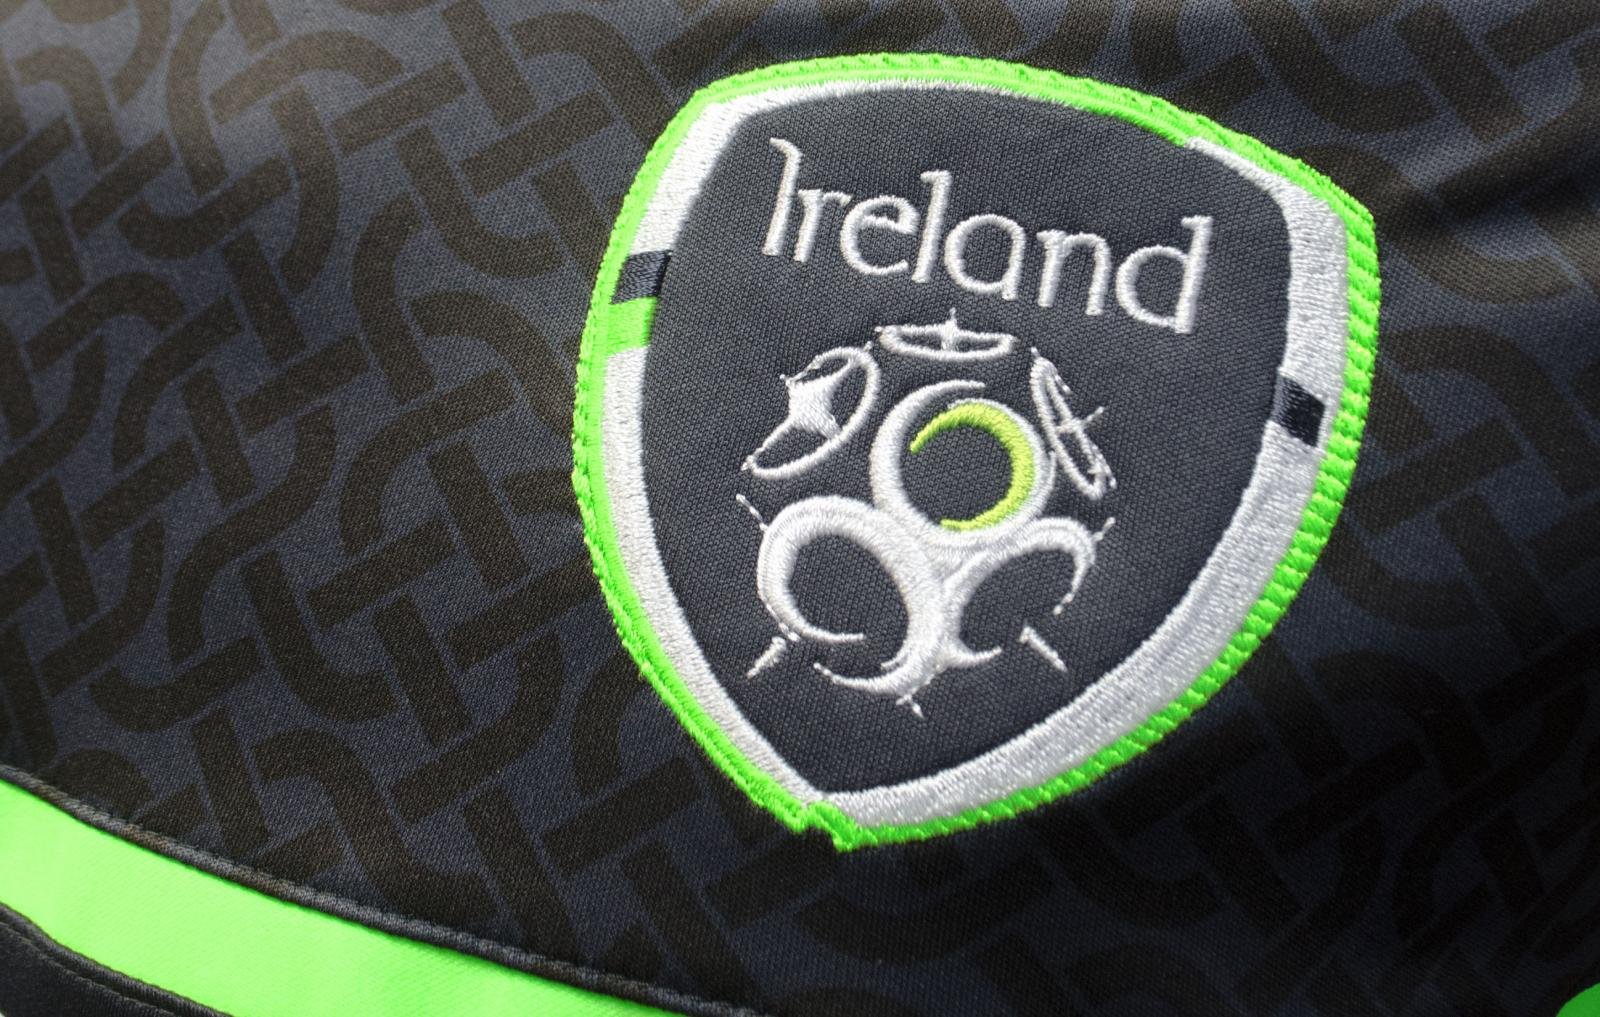 Republic of Ireland’s 2016 away kit